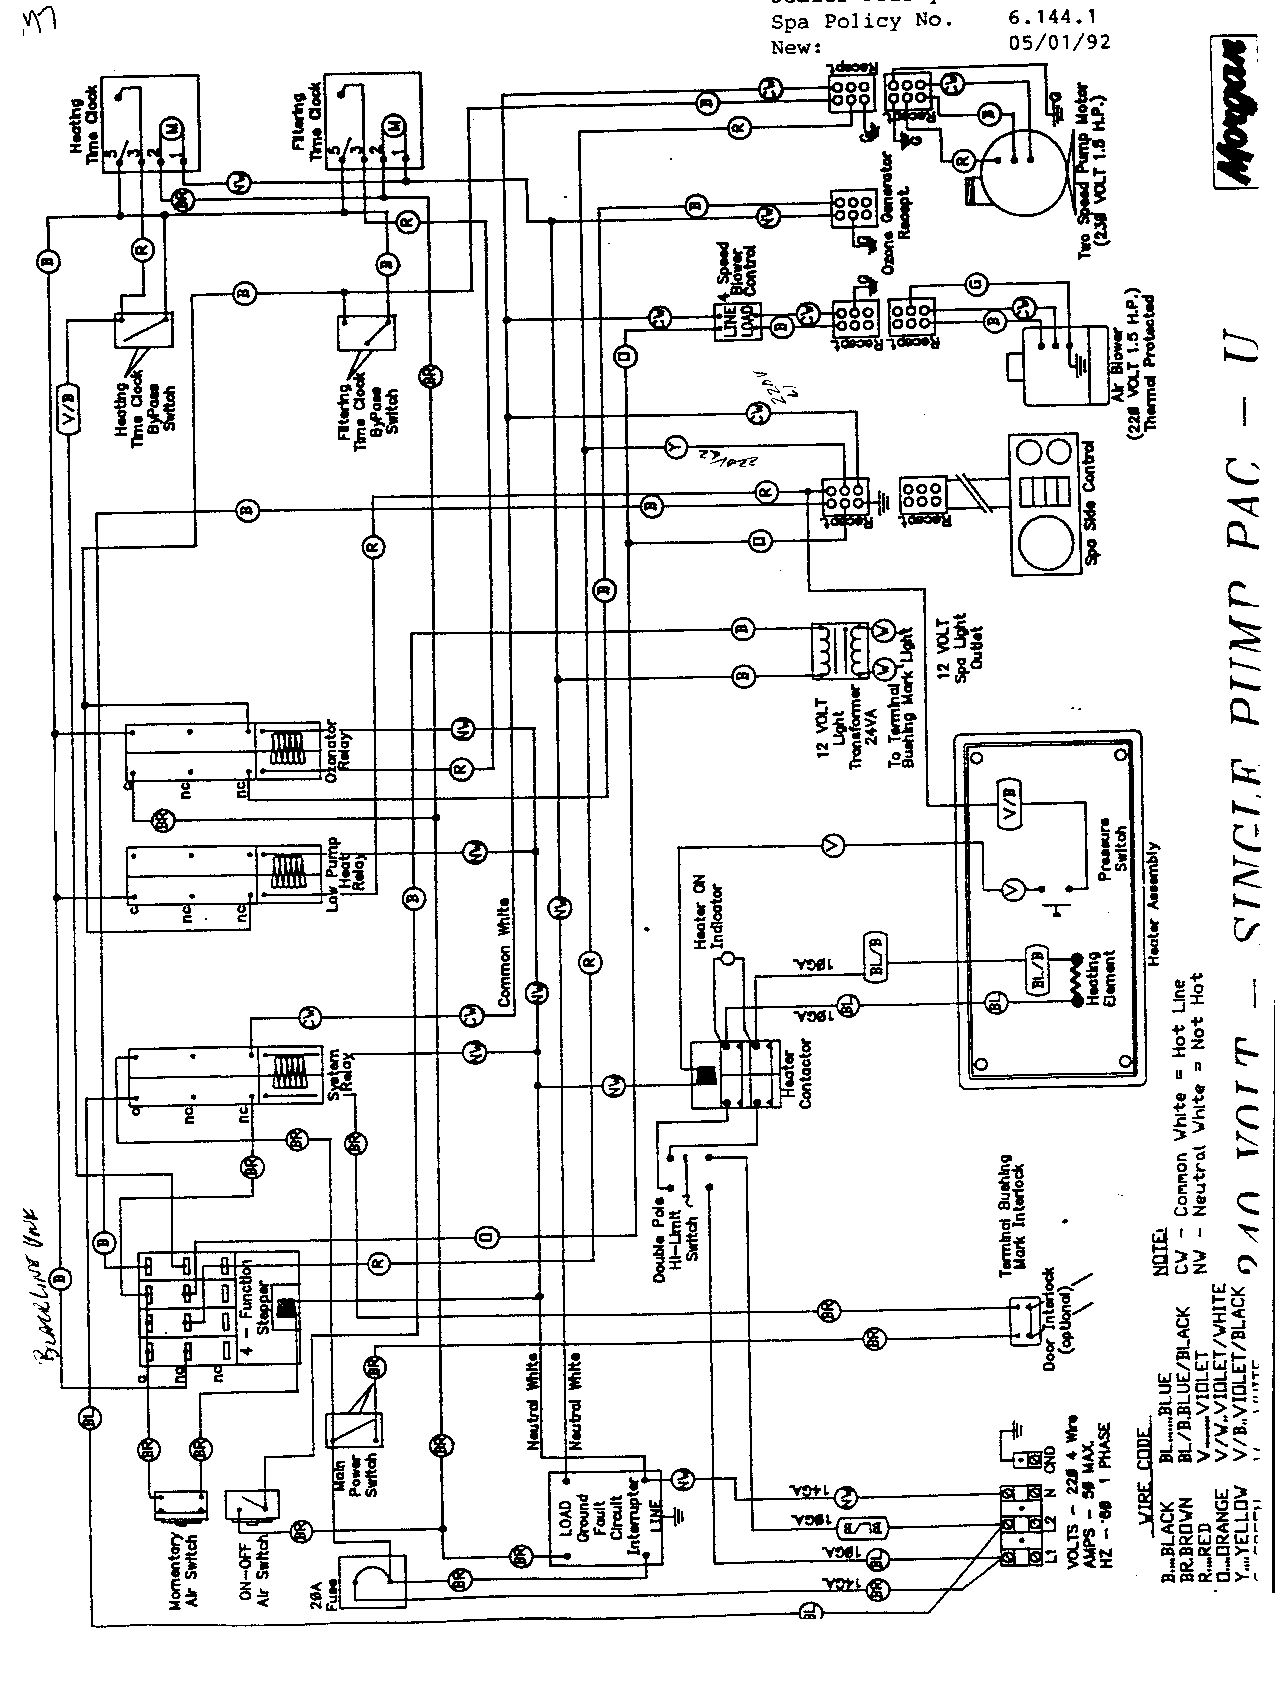 istar pro wiring diagram